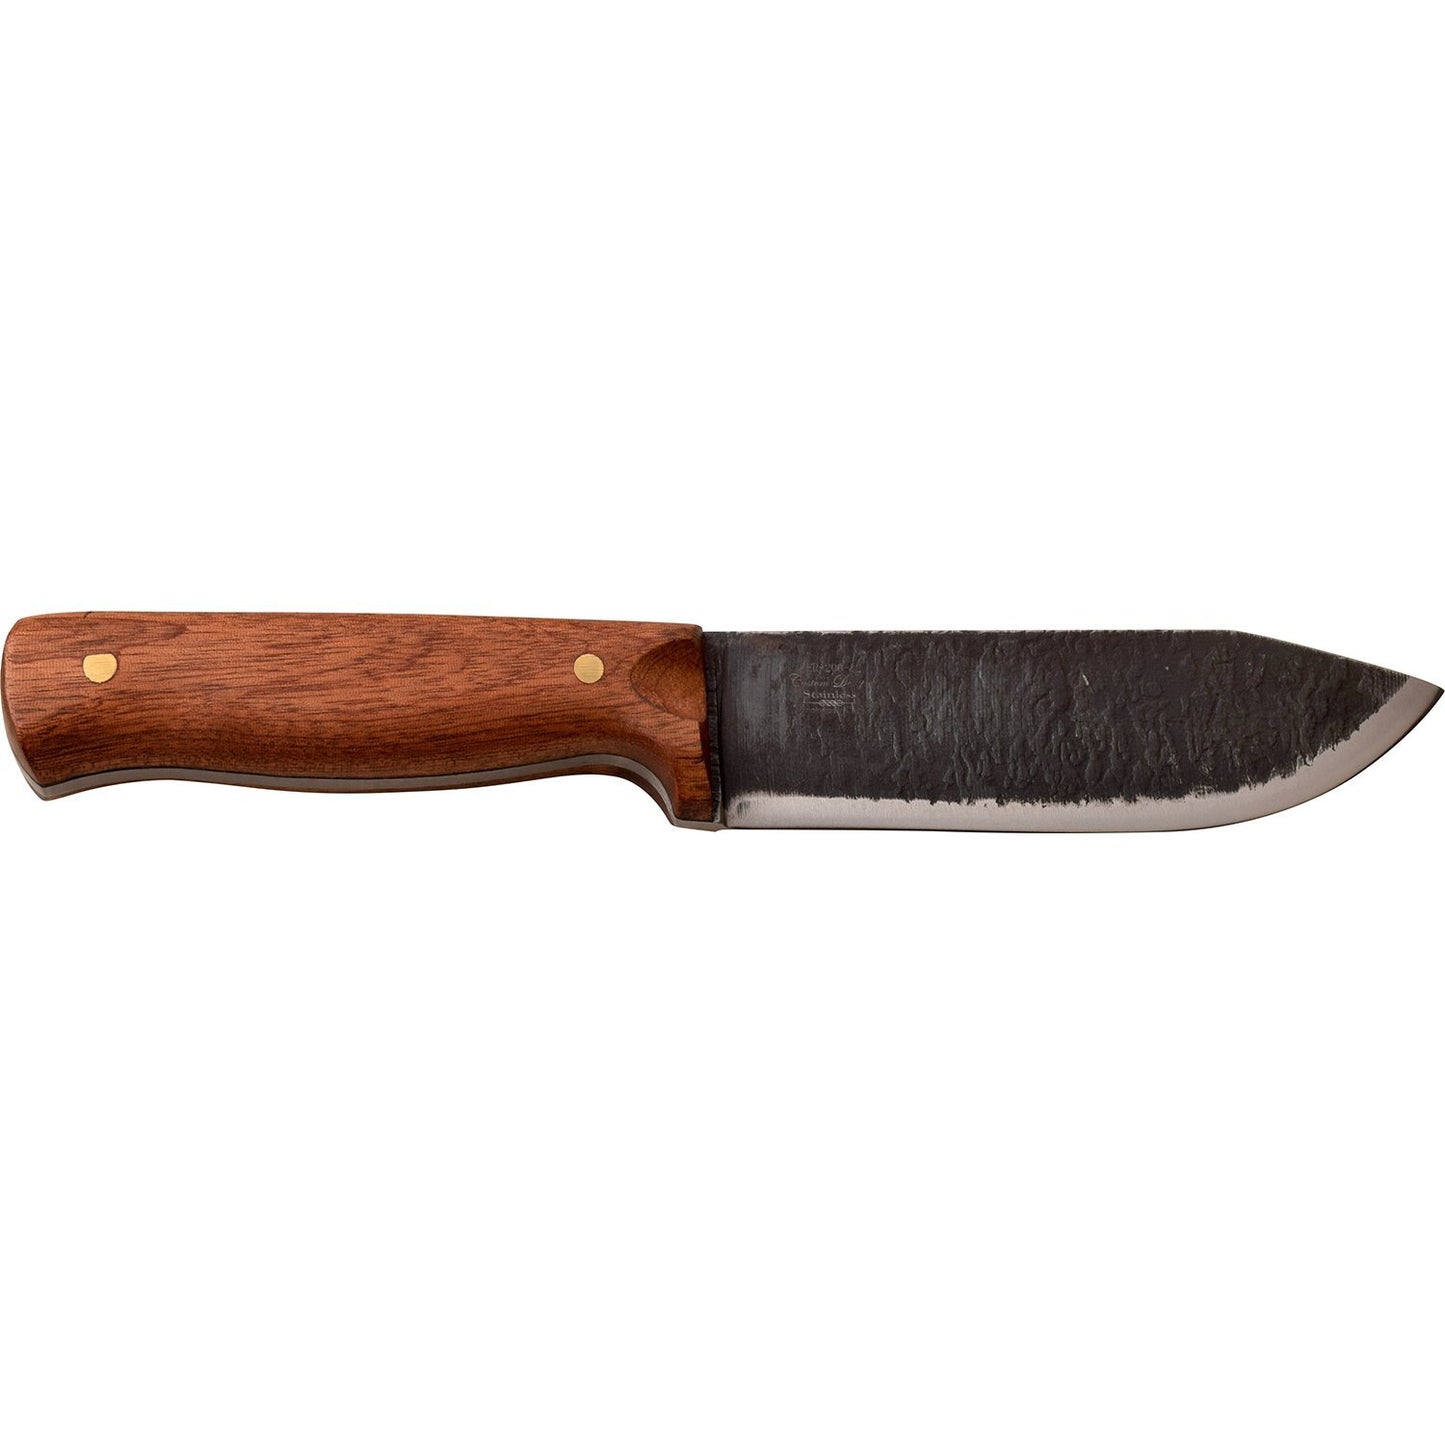 Elk Ridge Elk Ridge 10.1 Inch Hunting Drop Point Fixed Blade Knife - W Leather Sheath #er-200-12M Saddle Brown